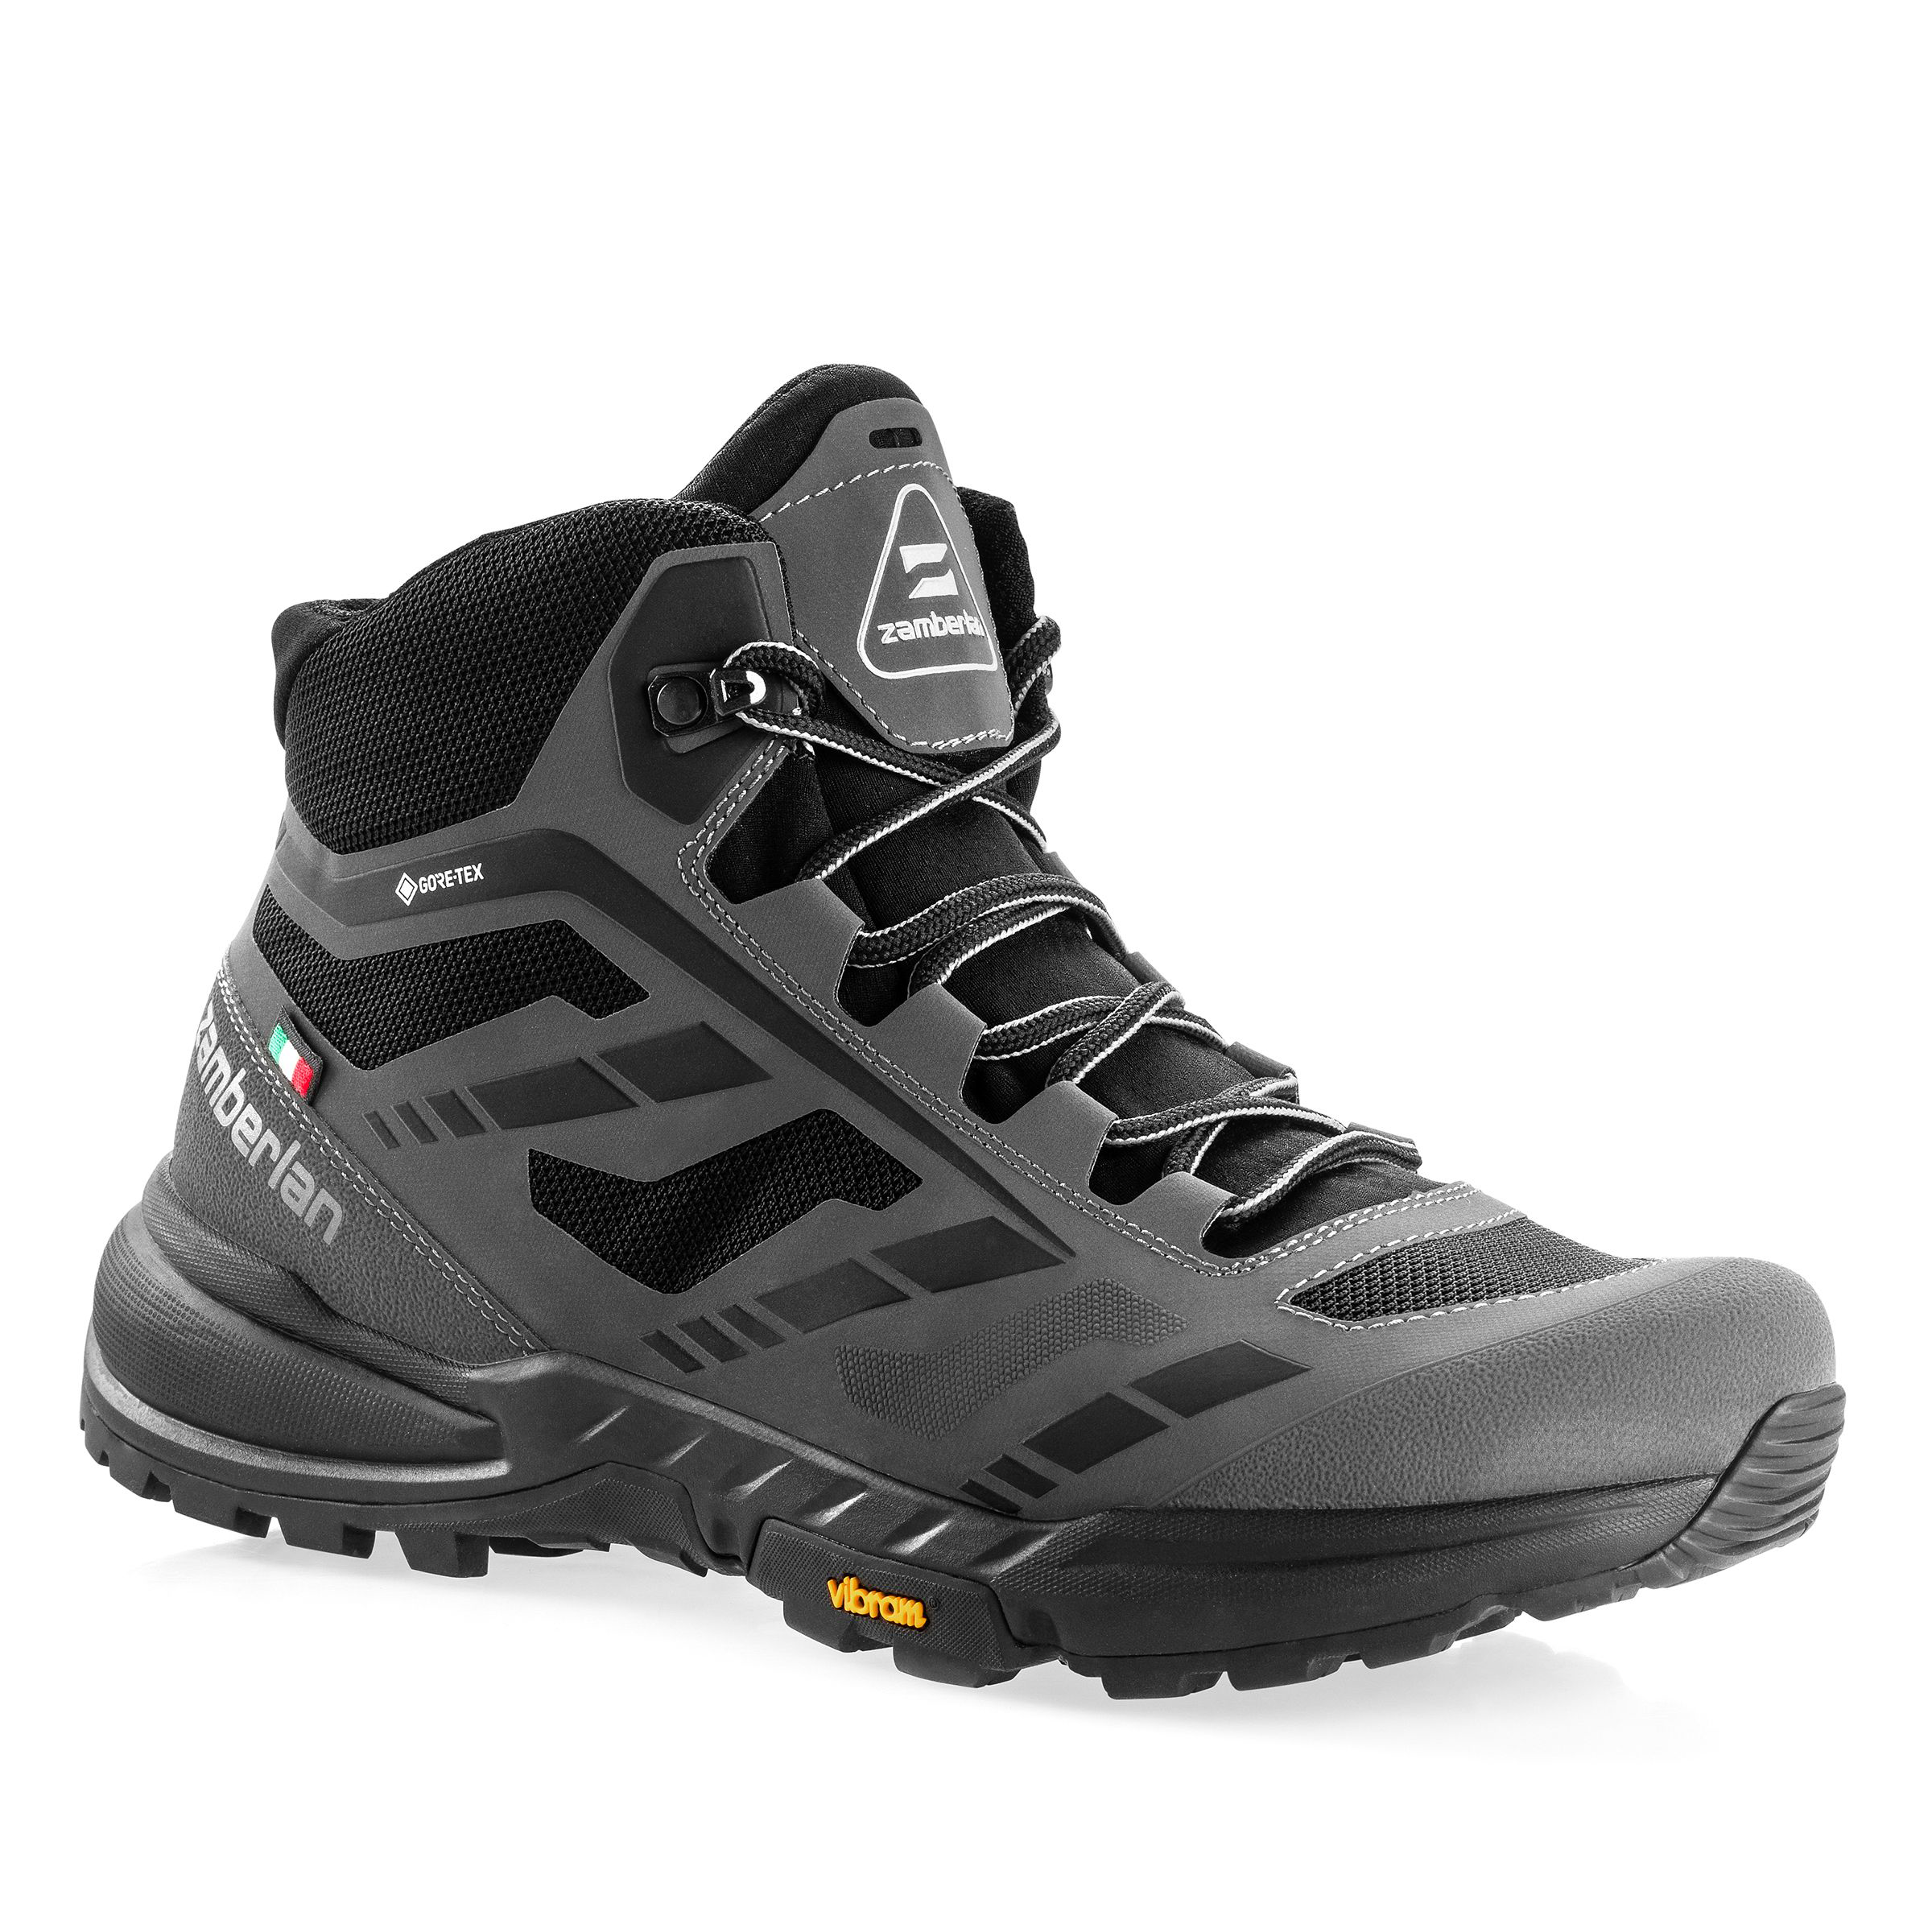 Zamberlan 219 Anabasis GTX Waterproof Mid Hiking Boots for Men - Grey - 8M